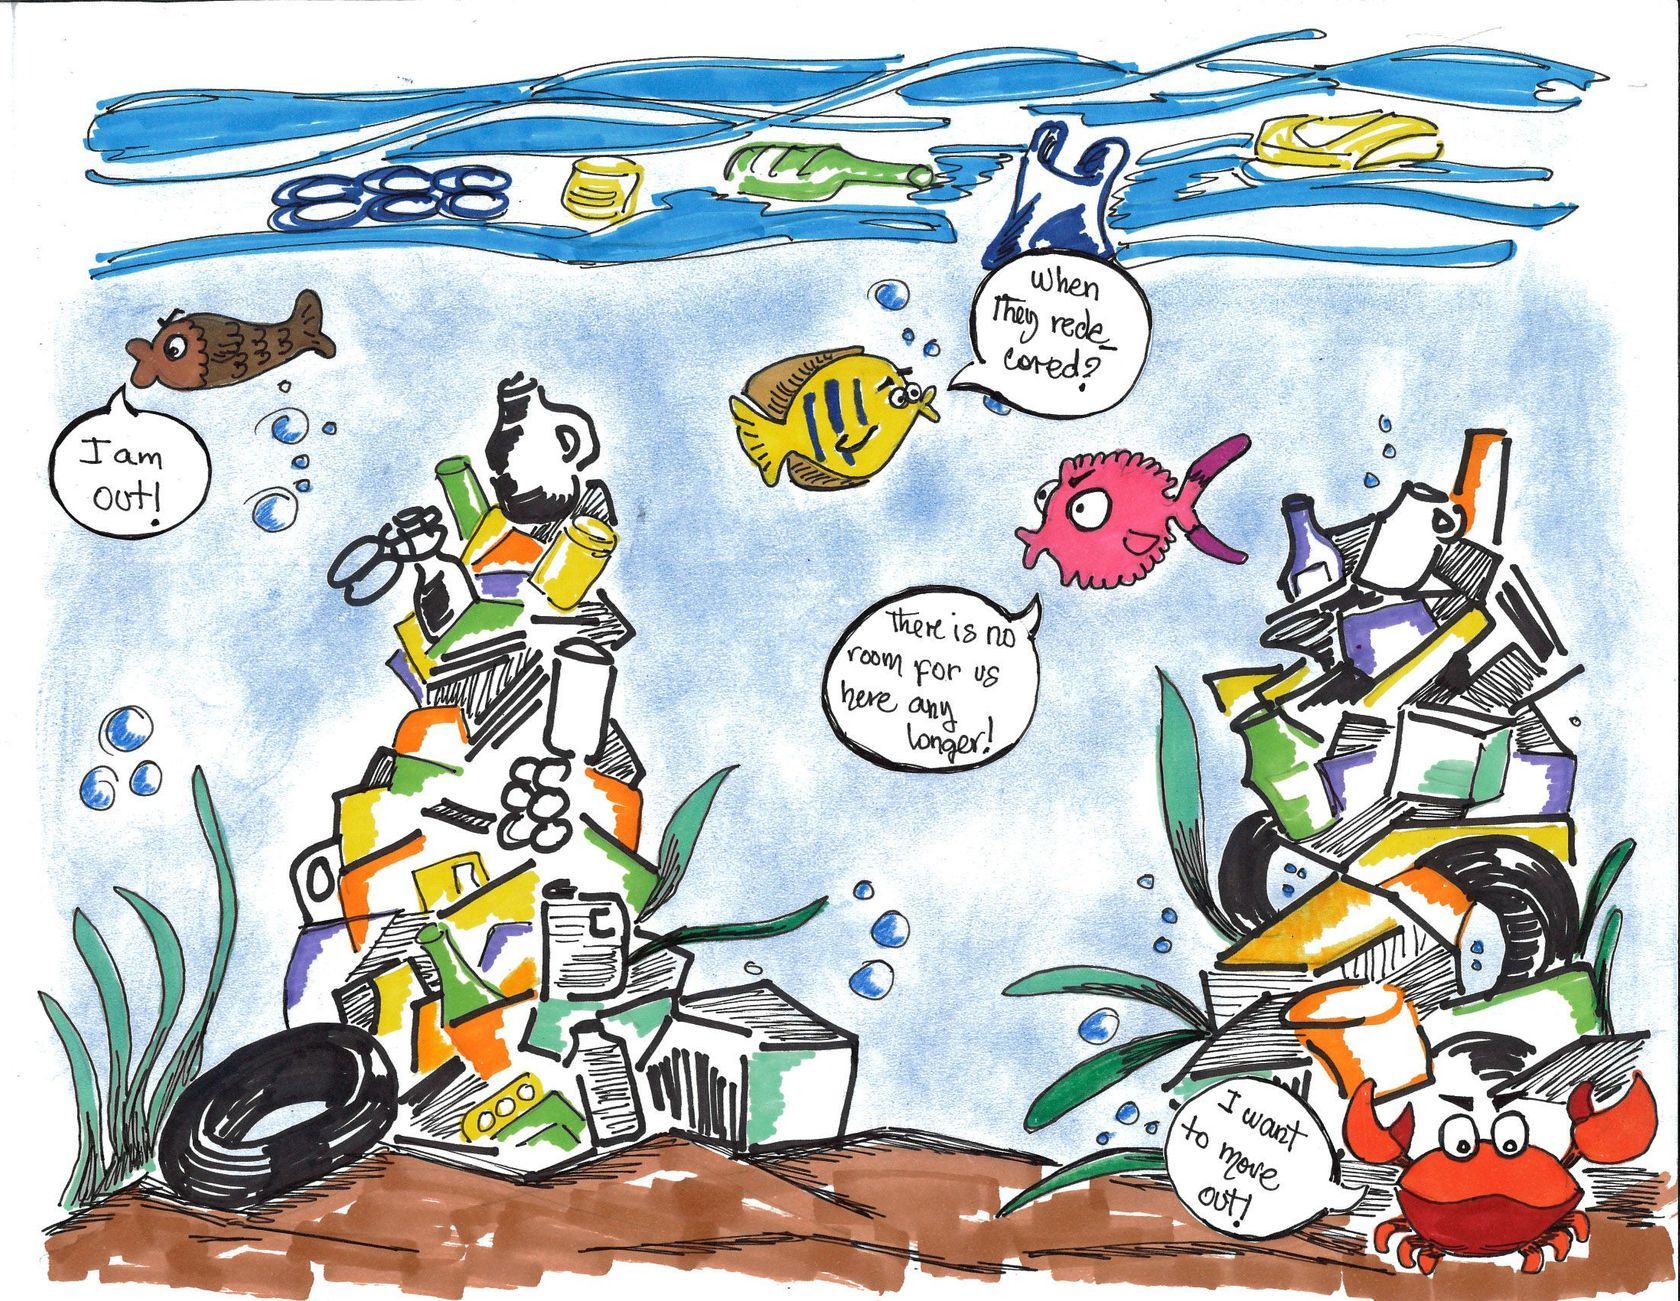 Plastic pollution picture draw